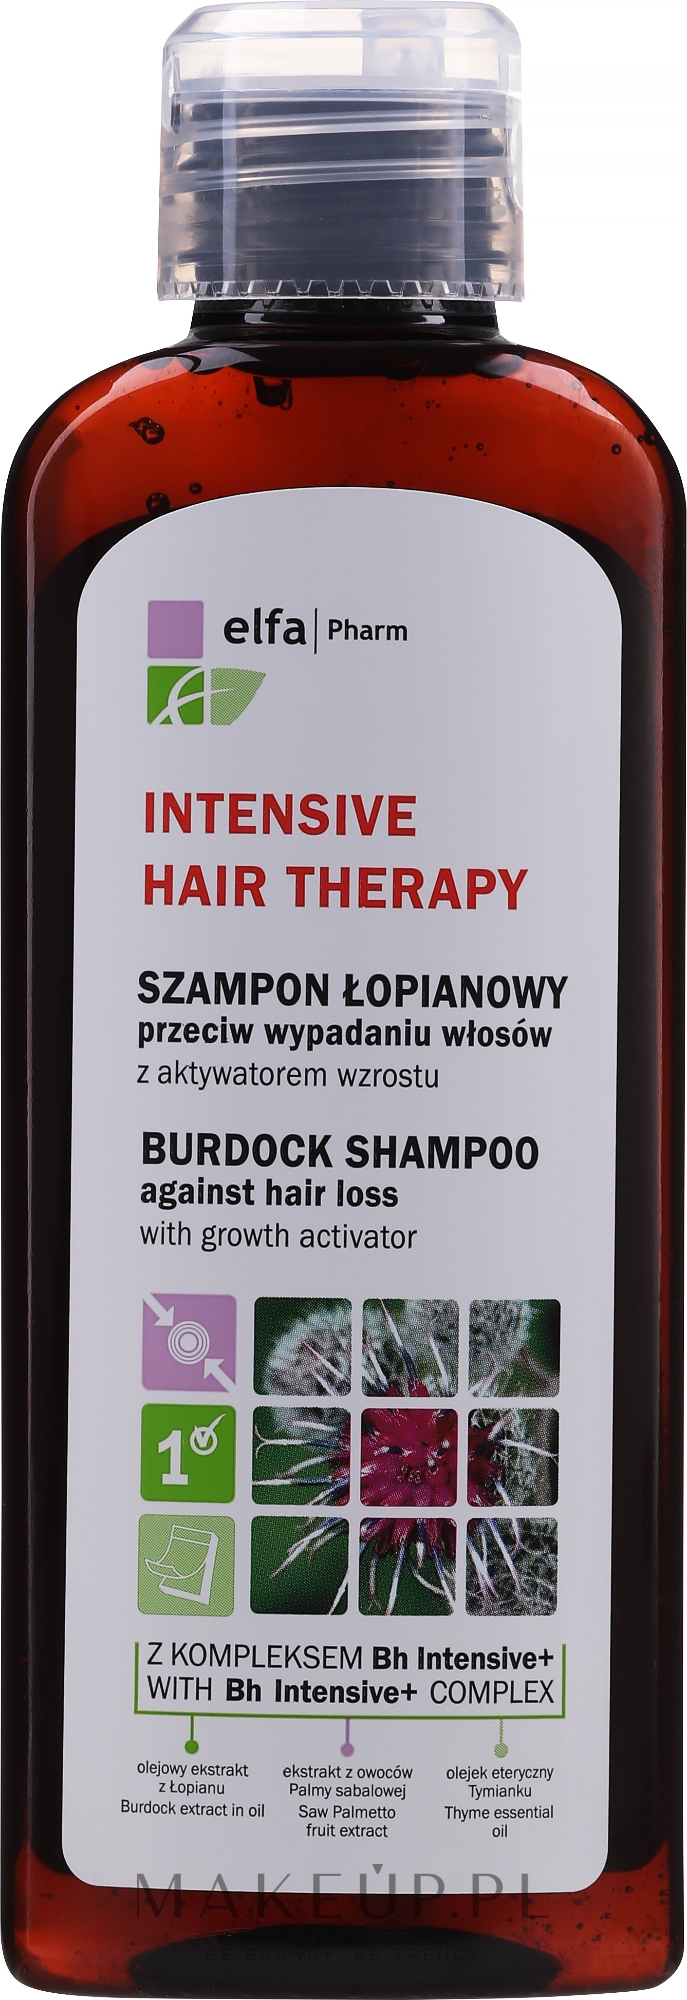 elfa intensive hair therapt szampon lopianowy